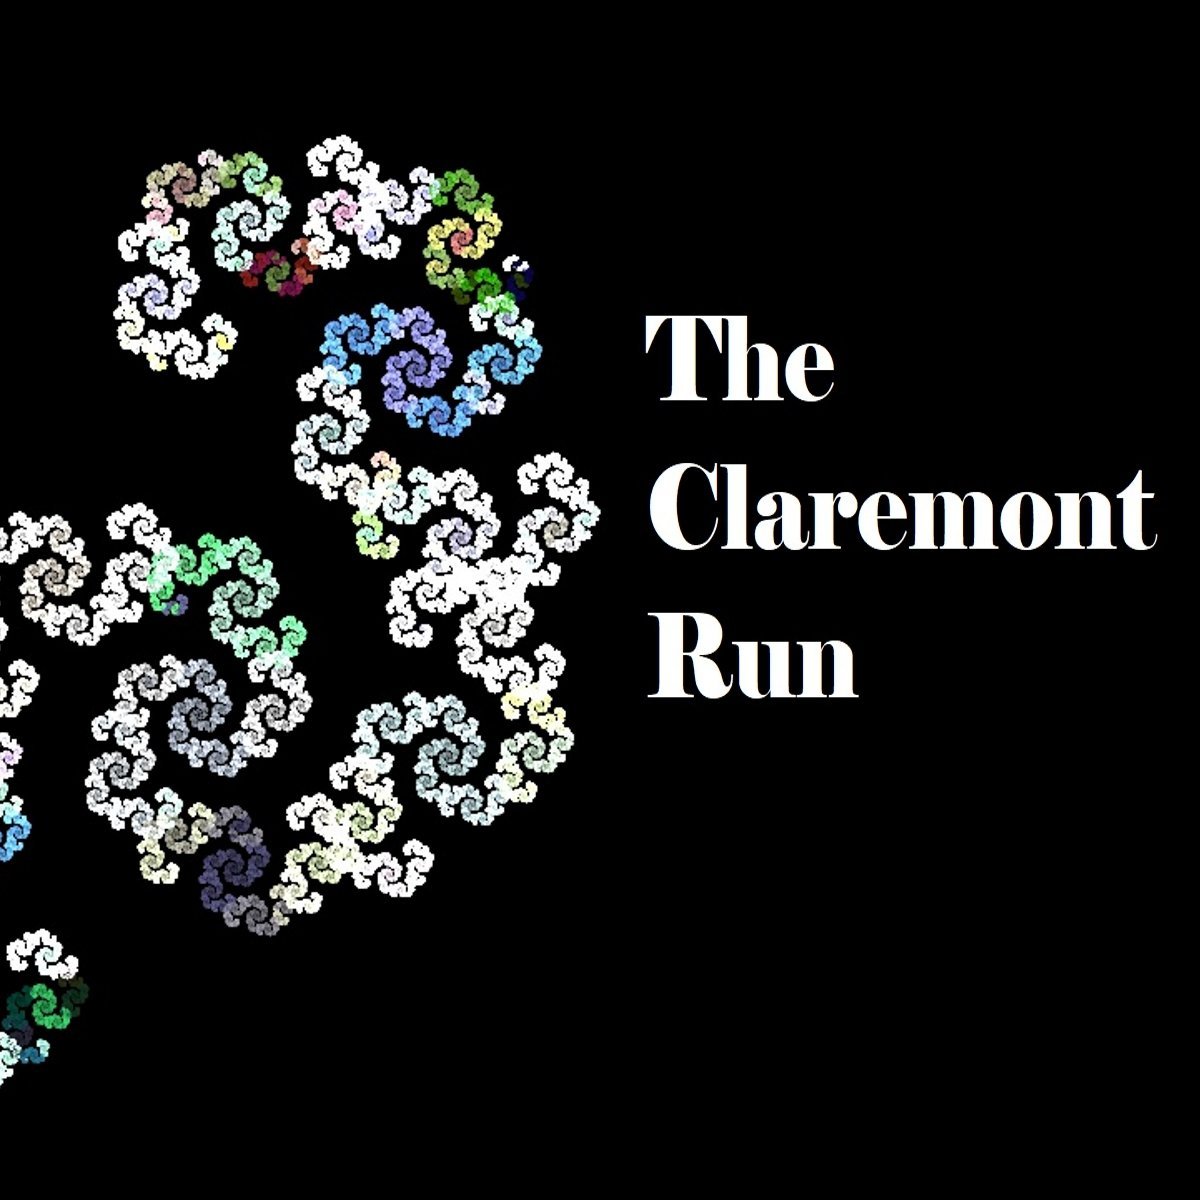 The Claremont Run